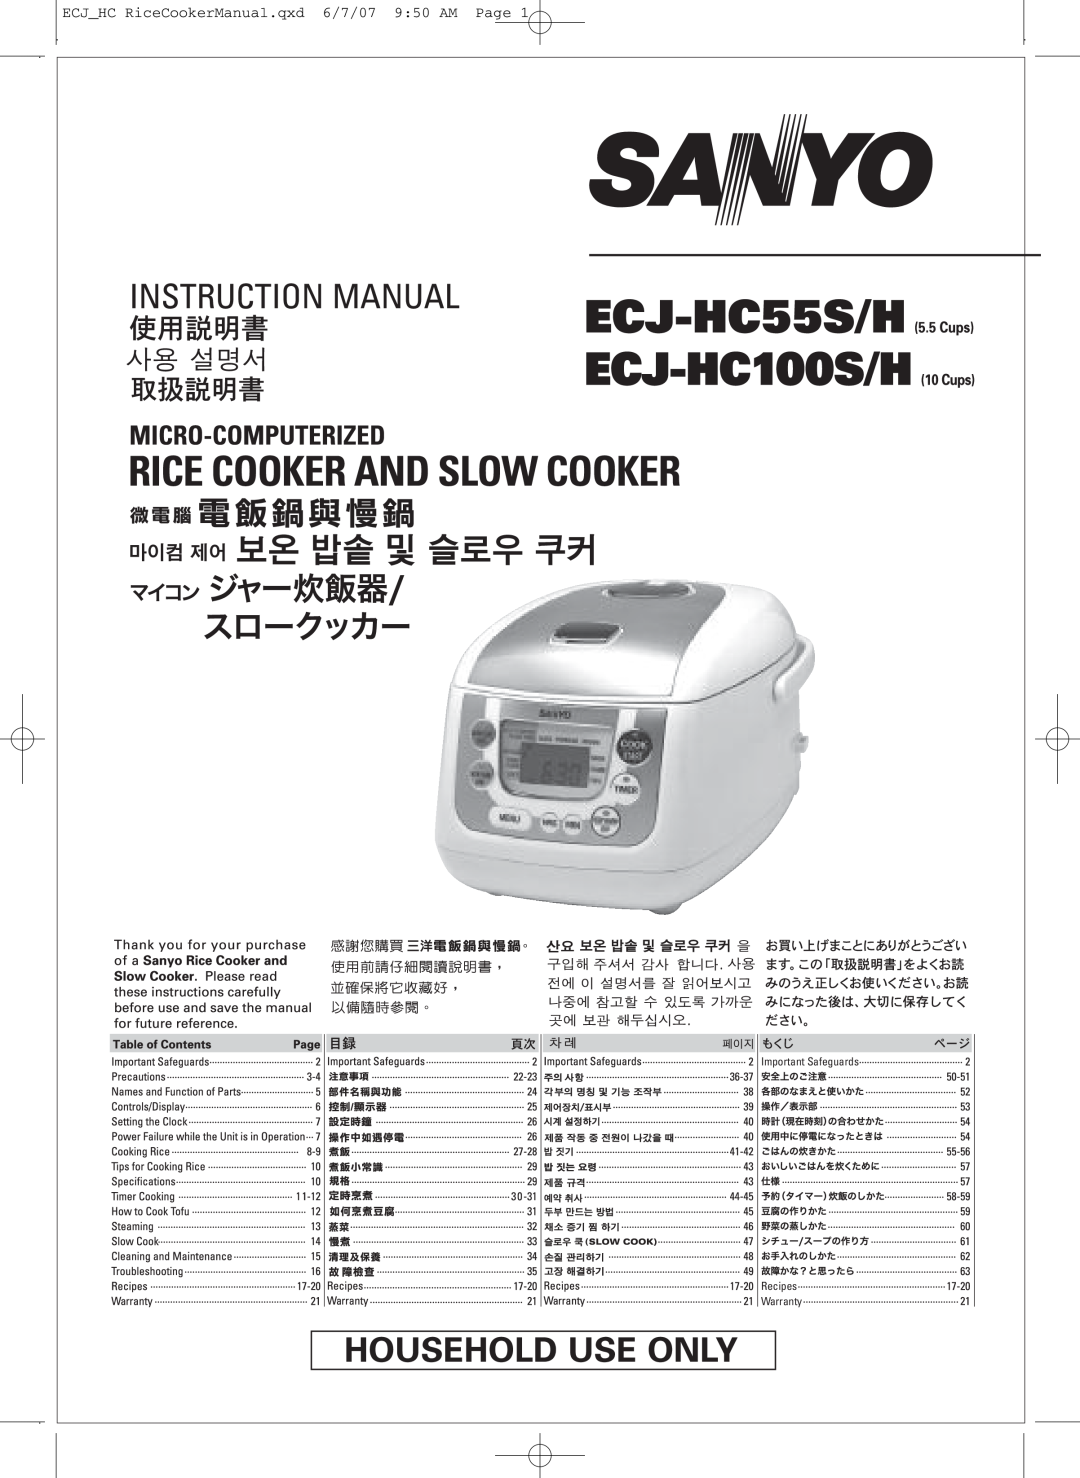 Sanyo ECJ-HC100H warranty ECJHC RiceCookerManual.qxd 6/7/07 950 AM Page, Recipes, Warranty, Important Safeguards 